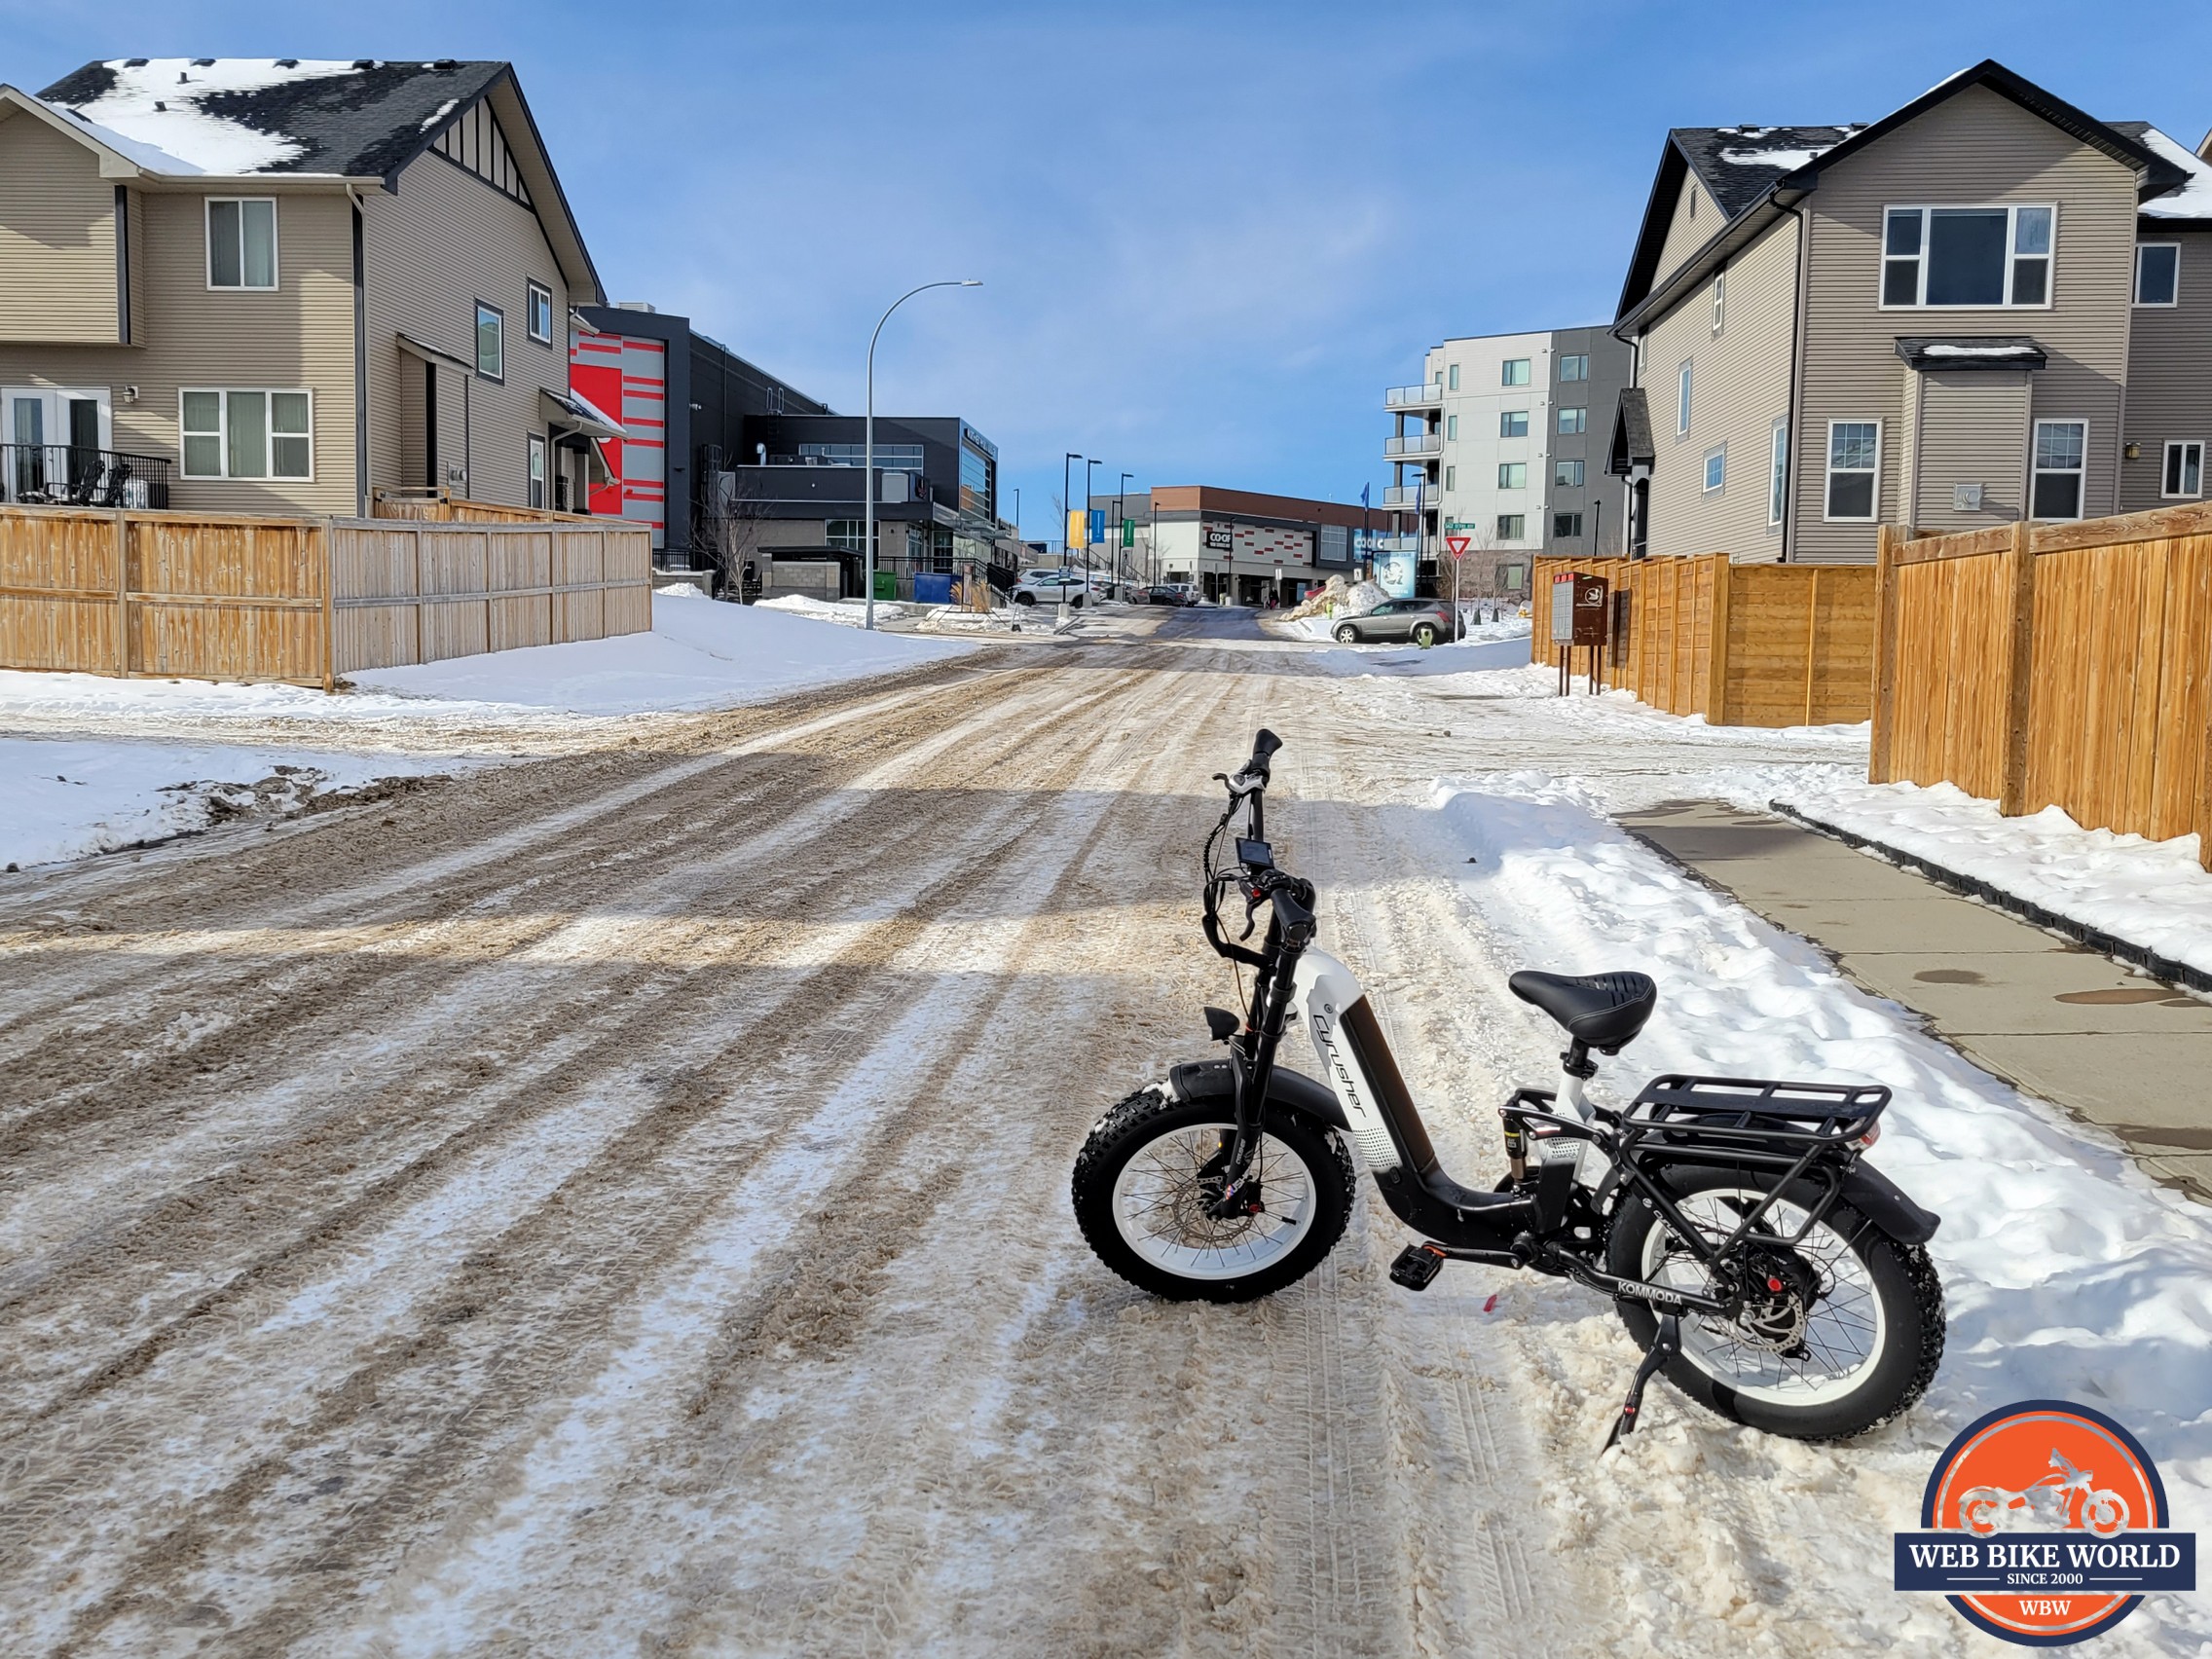 The Kommoda ebike in a neighborhood with snowy roads